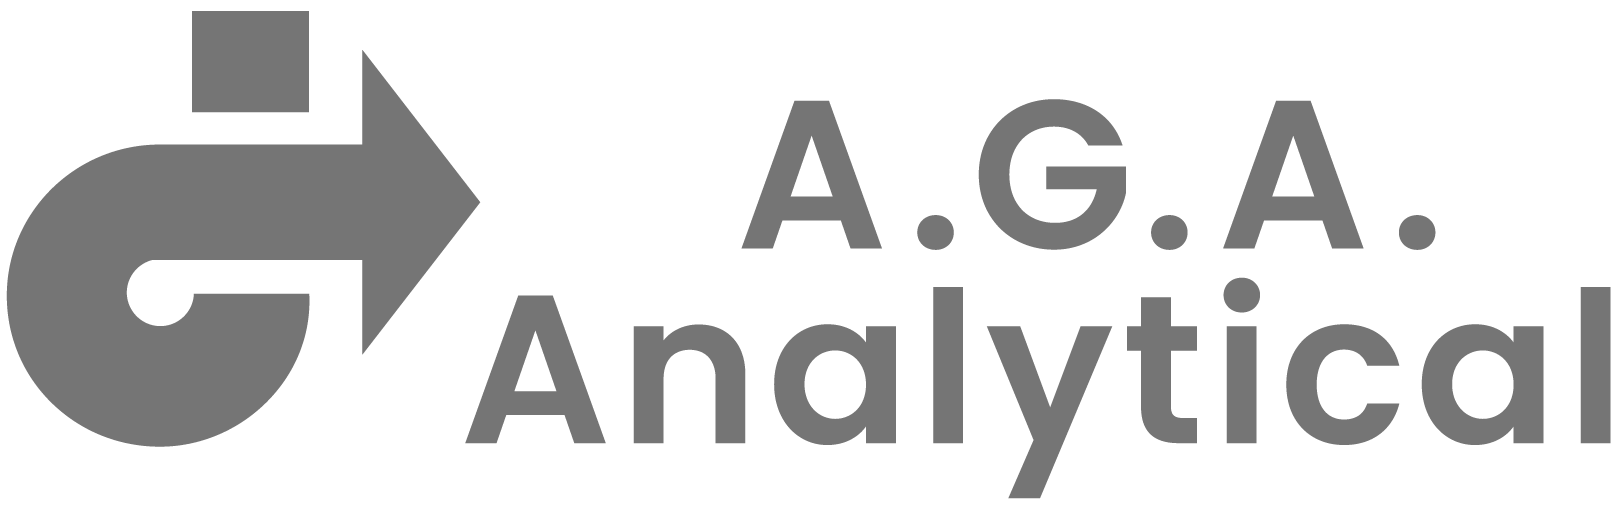 logo aga analytical